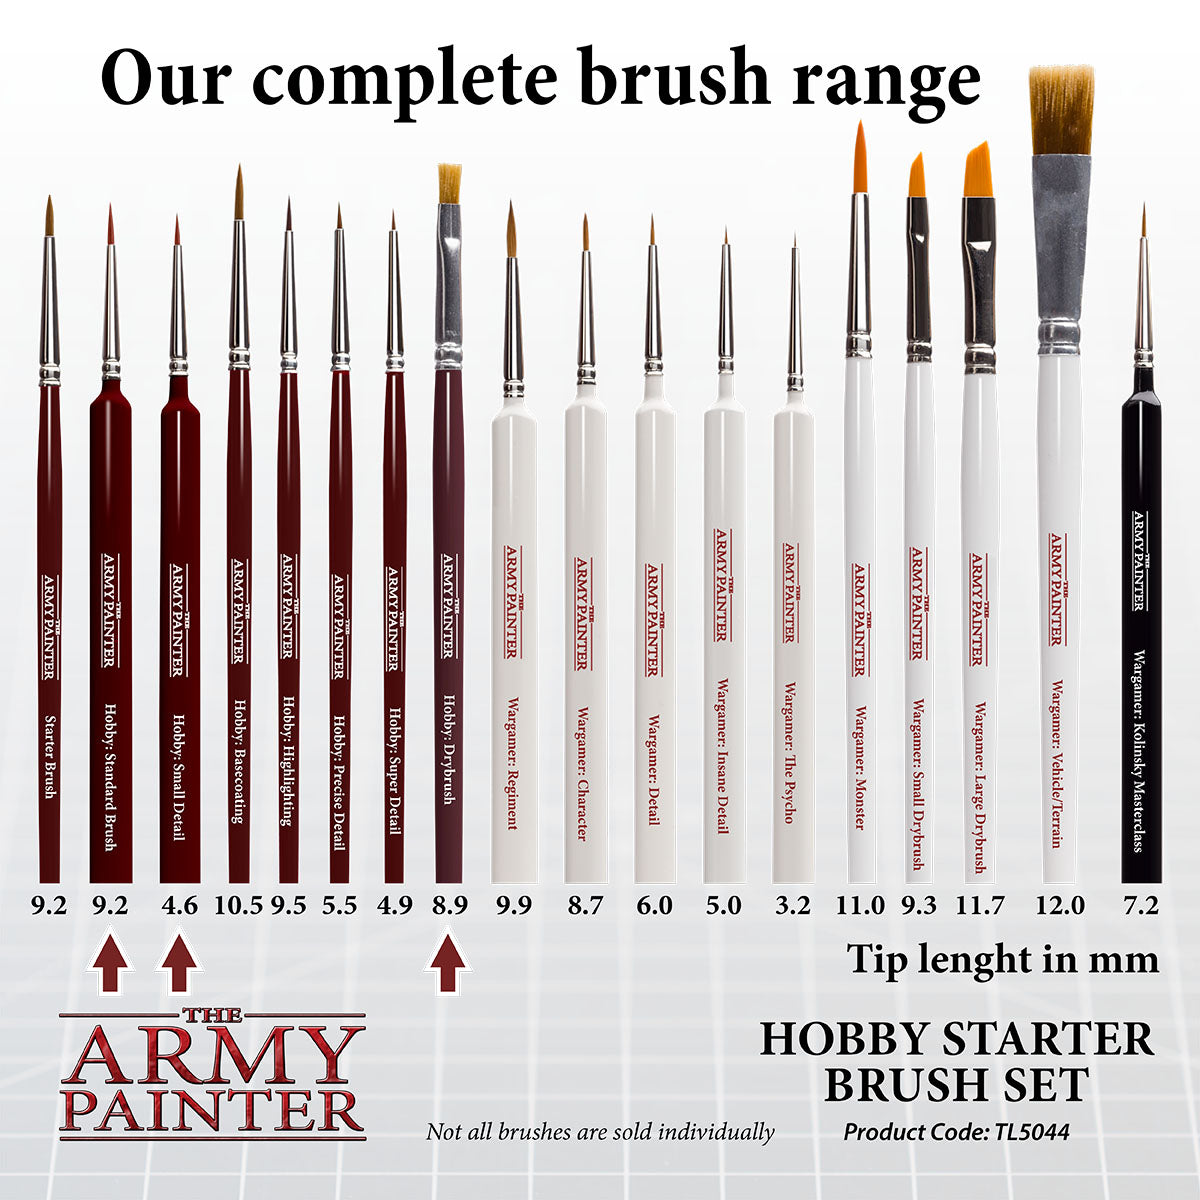 Army Painter Hobby Starter Brush Set | The Clever Kobold